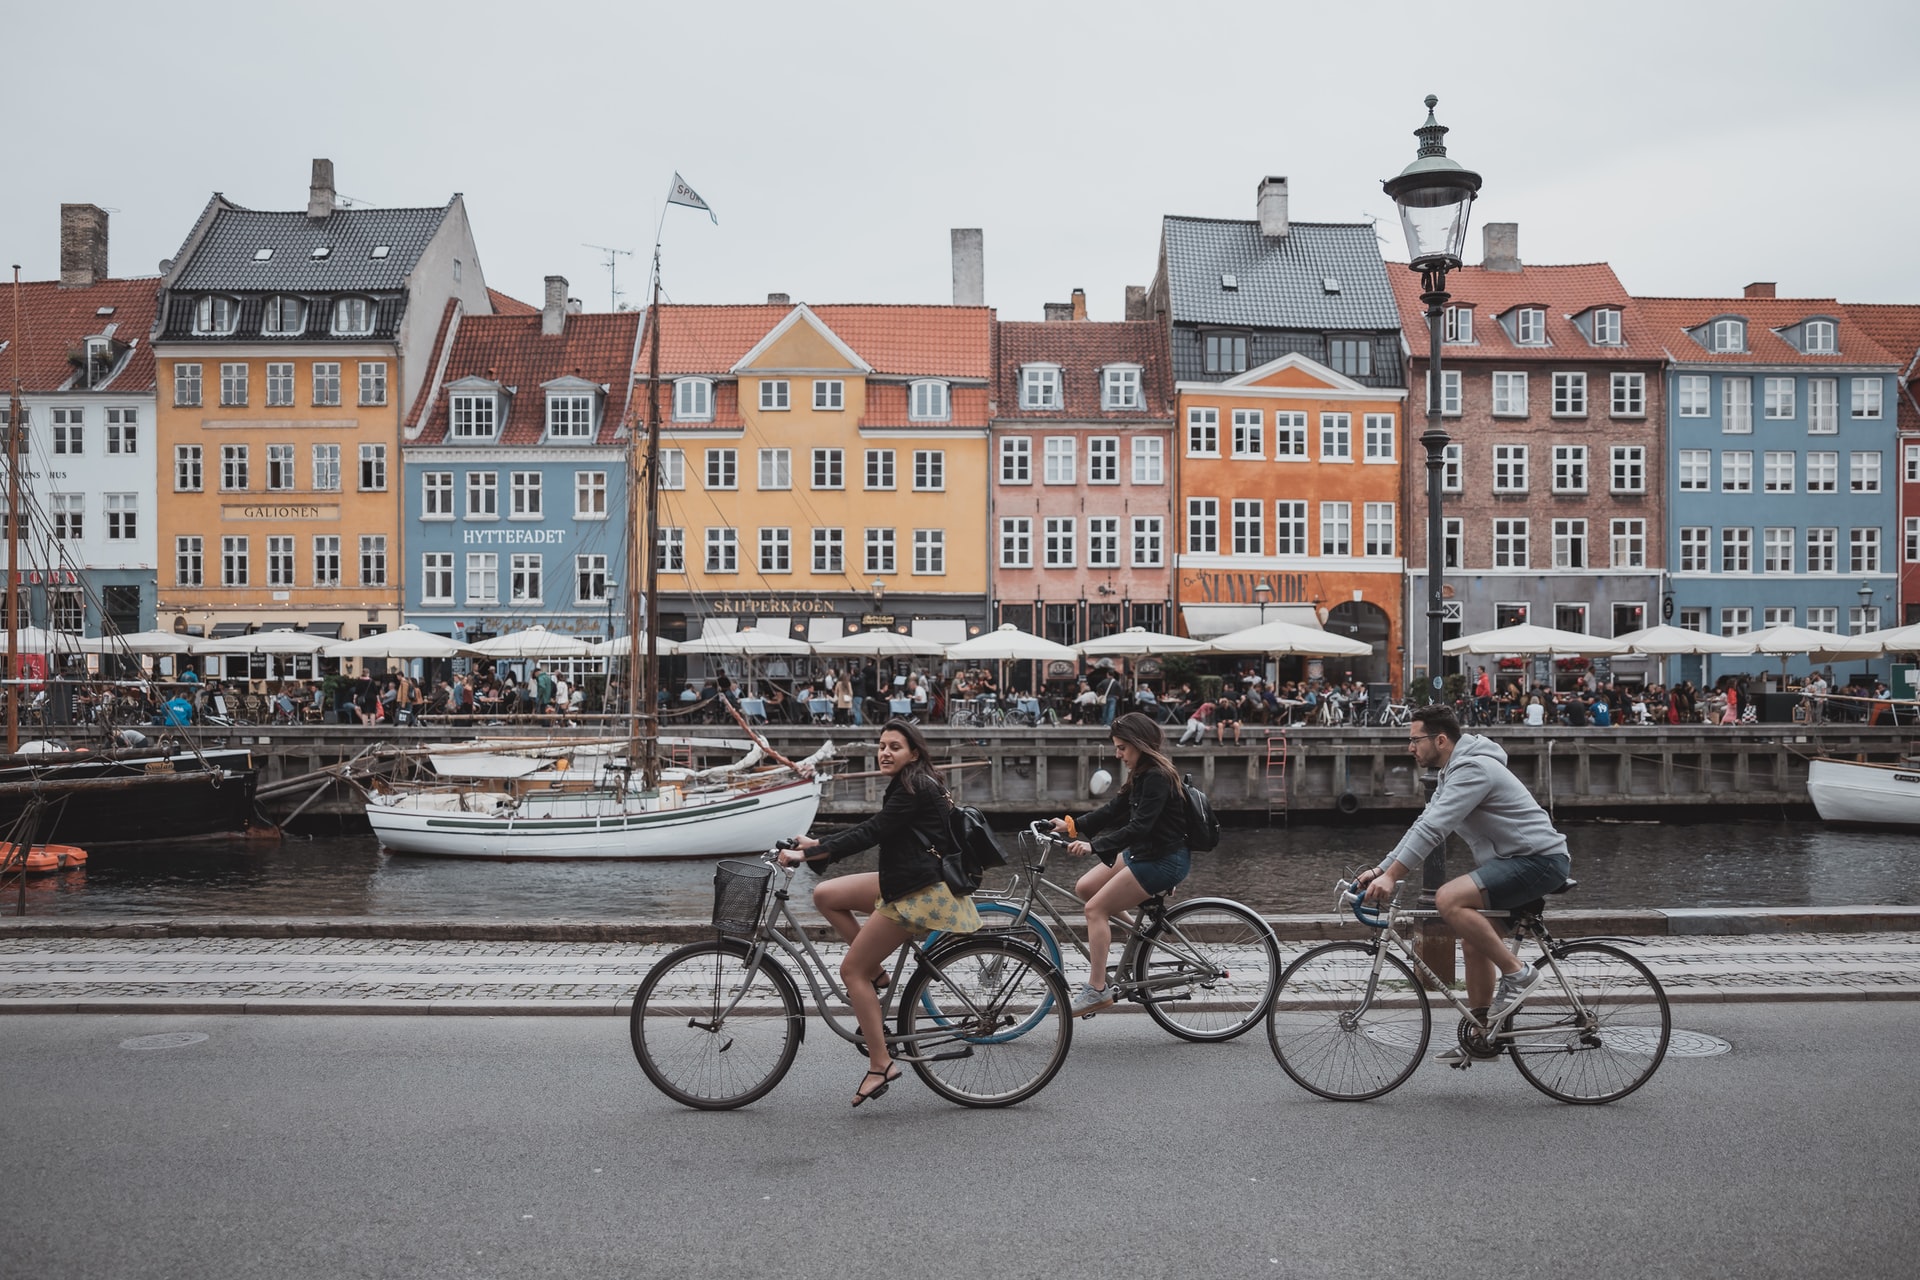 cose gratis da fare a Copenaghen